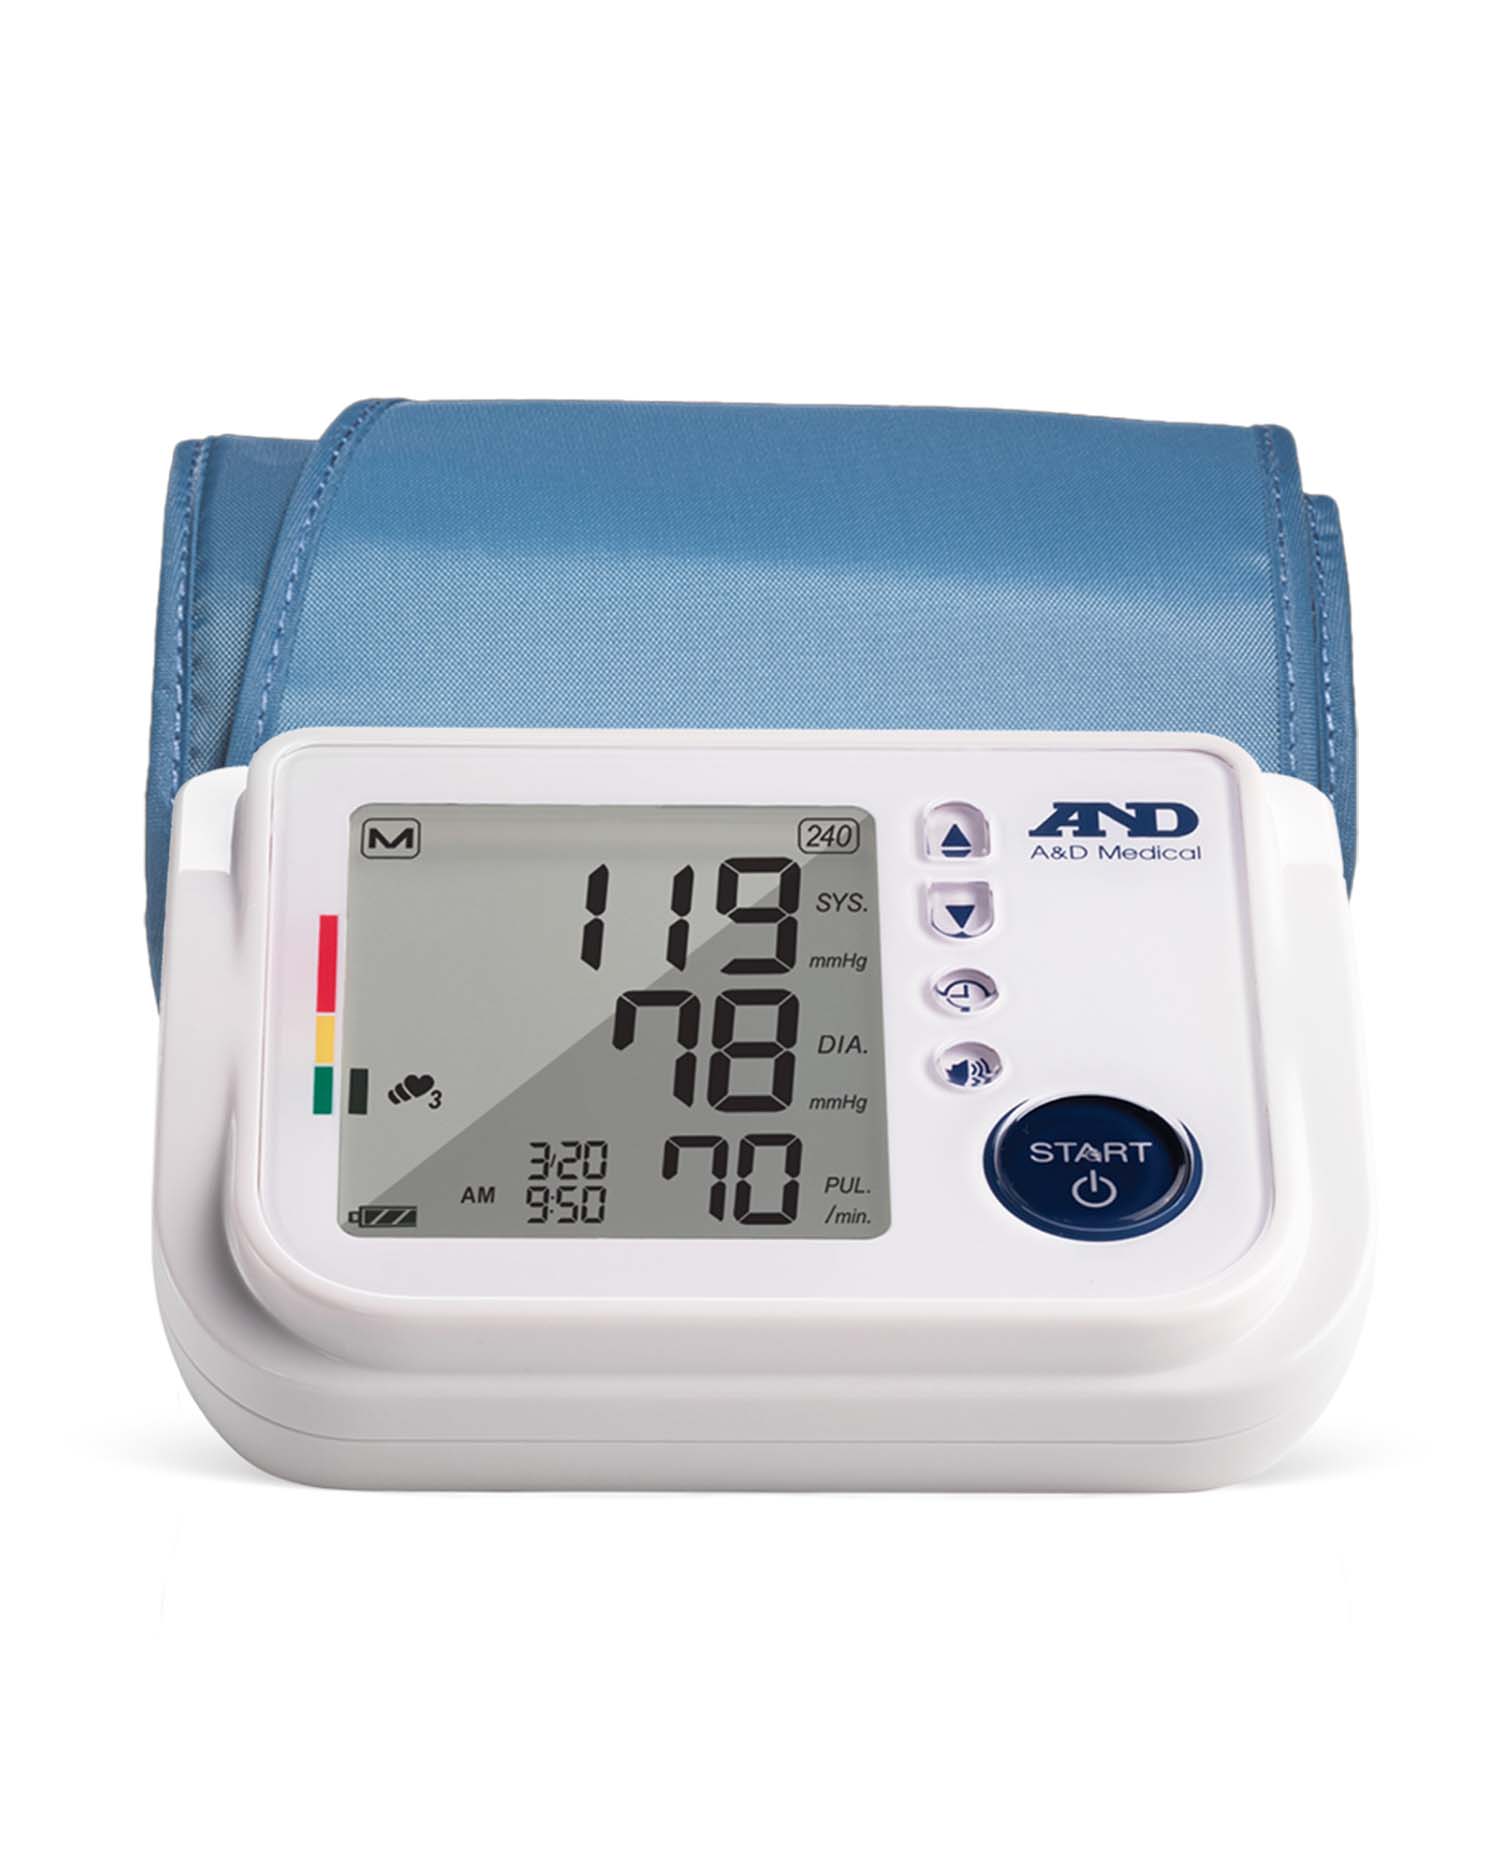 A&D Medical Multi-User Blood Pressure Monitor UA-767F